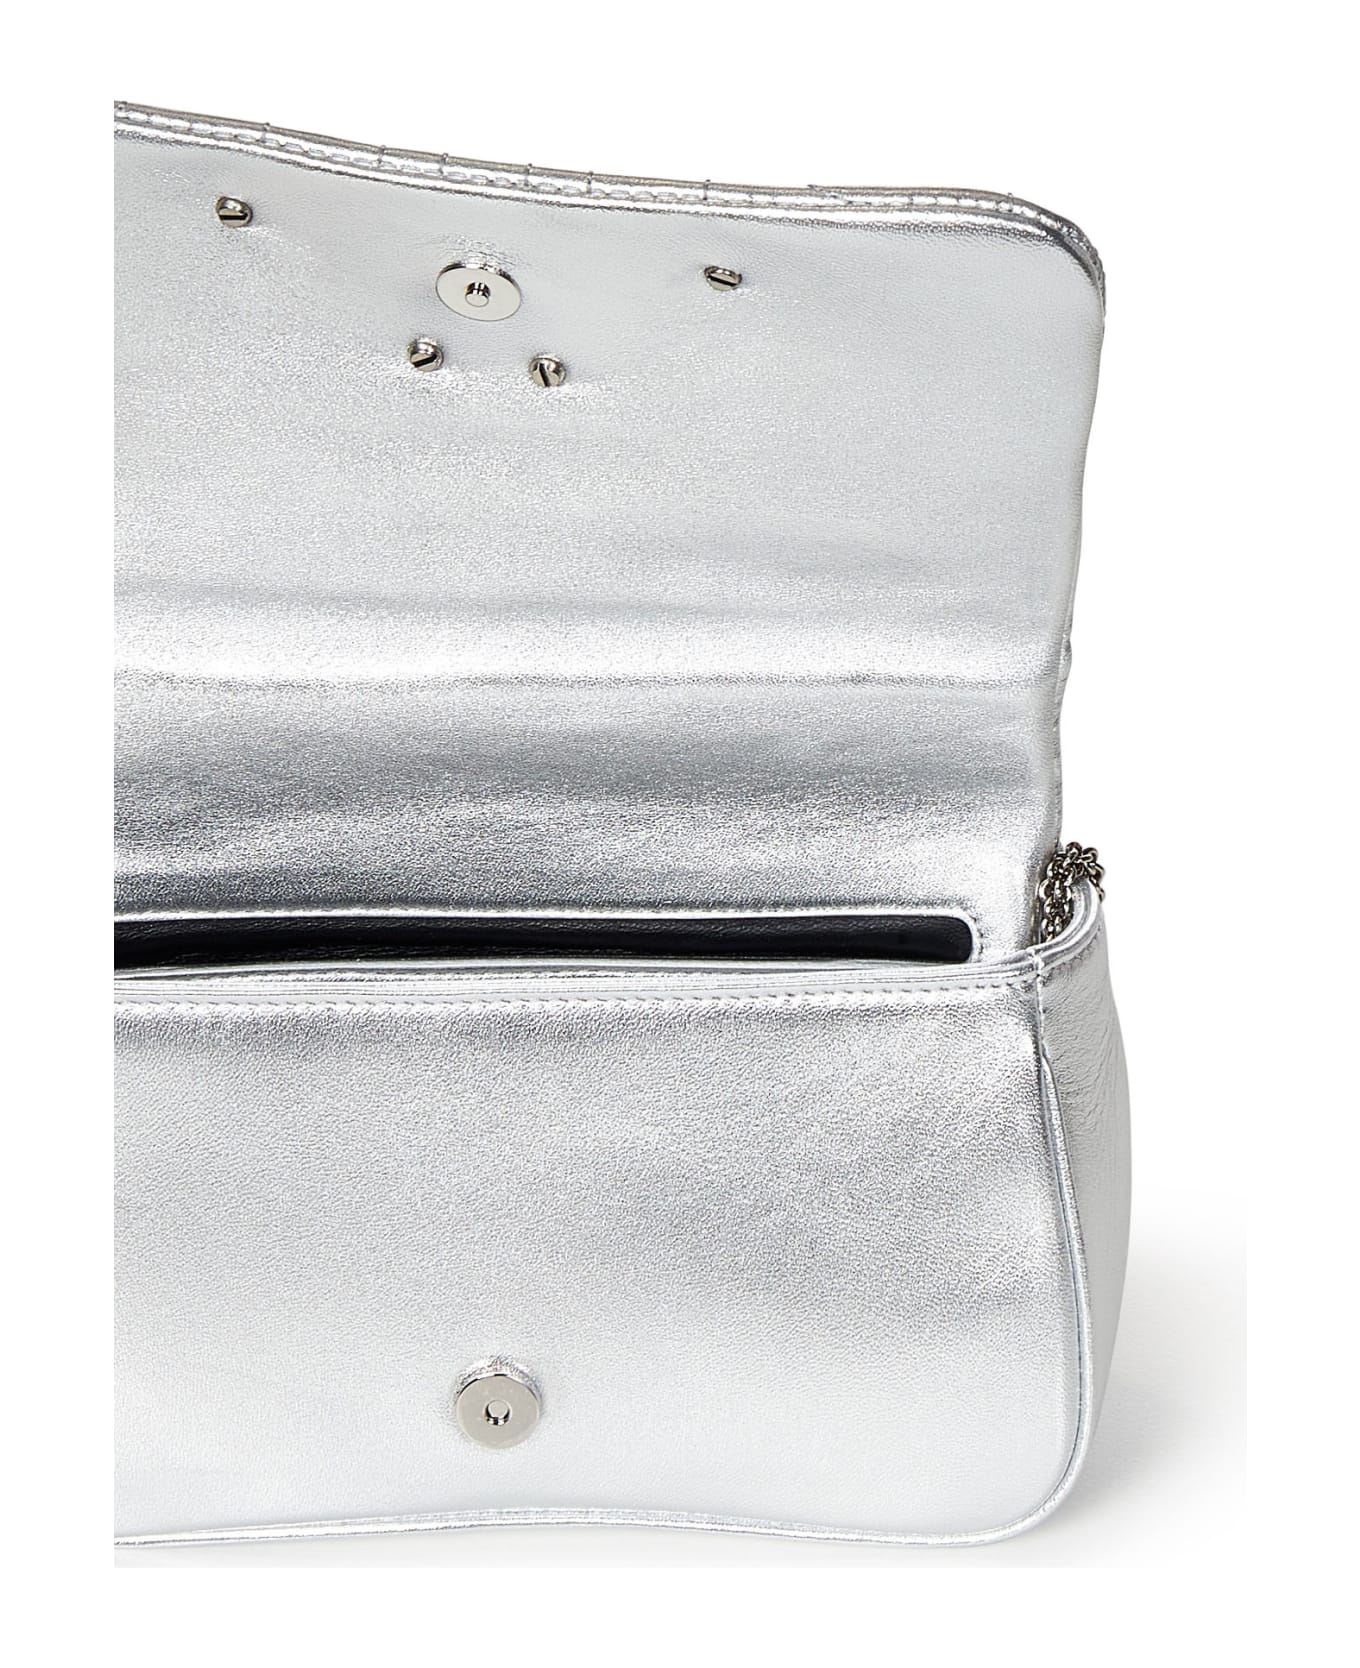 Alexander McQueen Mini Seal Shoulder Bag - Silver